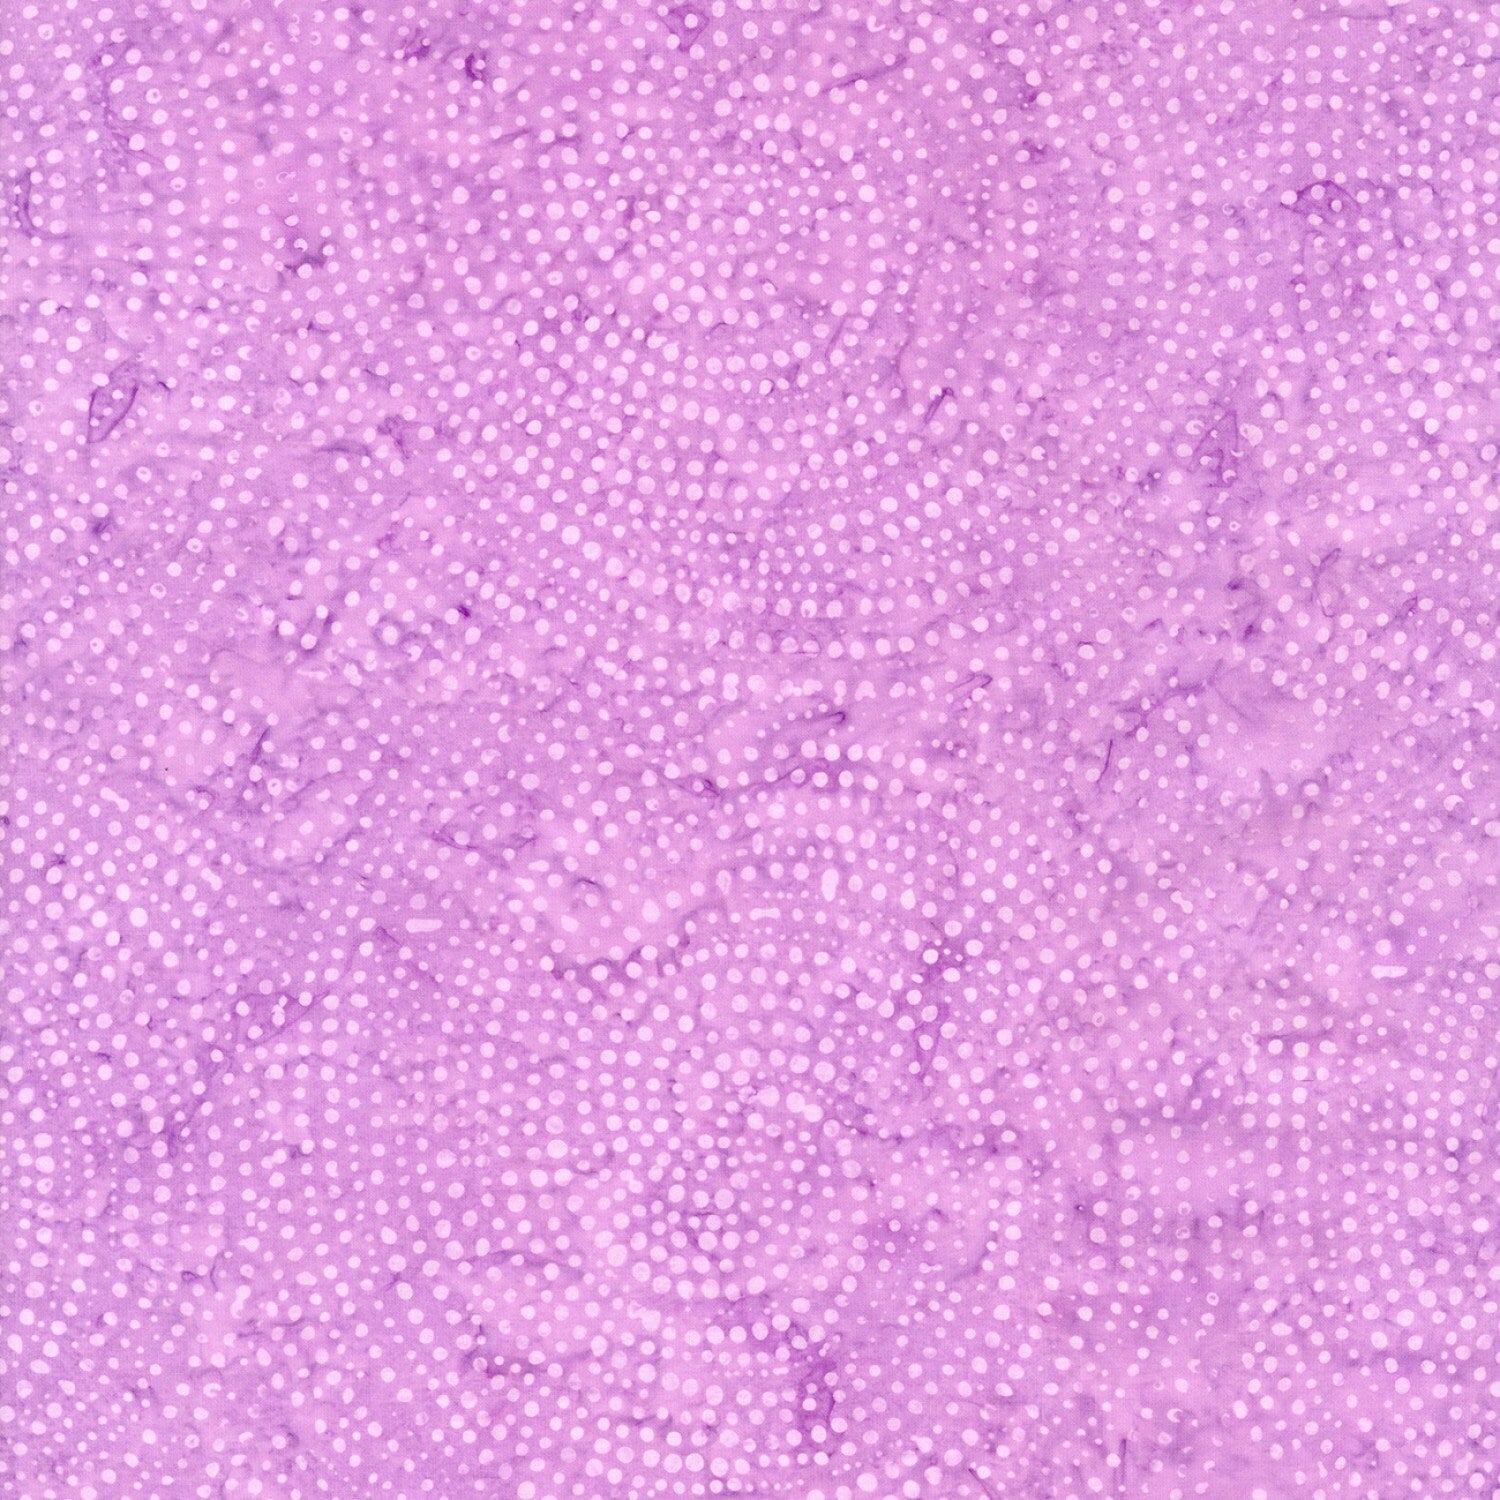 Pansy Batik 5" Squares, Timeless Treasures Treat-Mini42 Pansy, Lavender Purple Beige Batik Charm Pack, 5" Inch Precut Fabric Squares